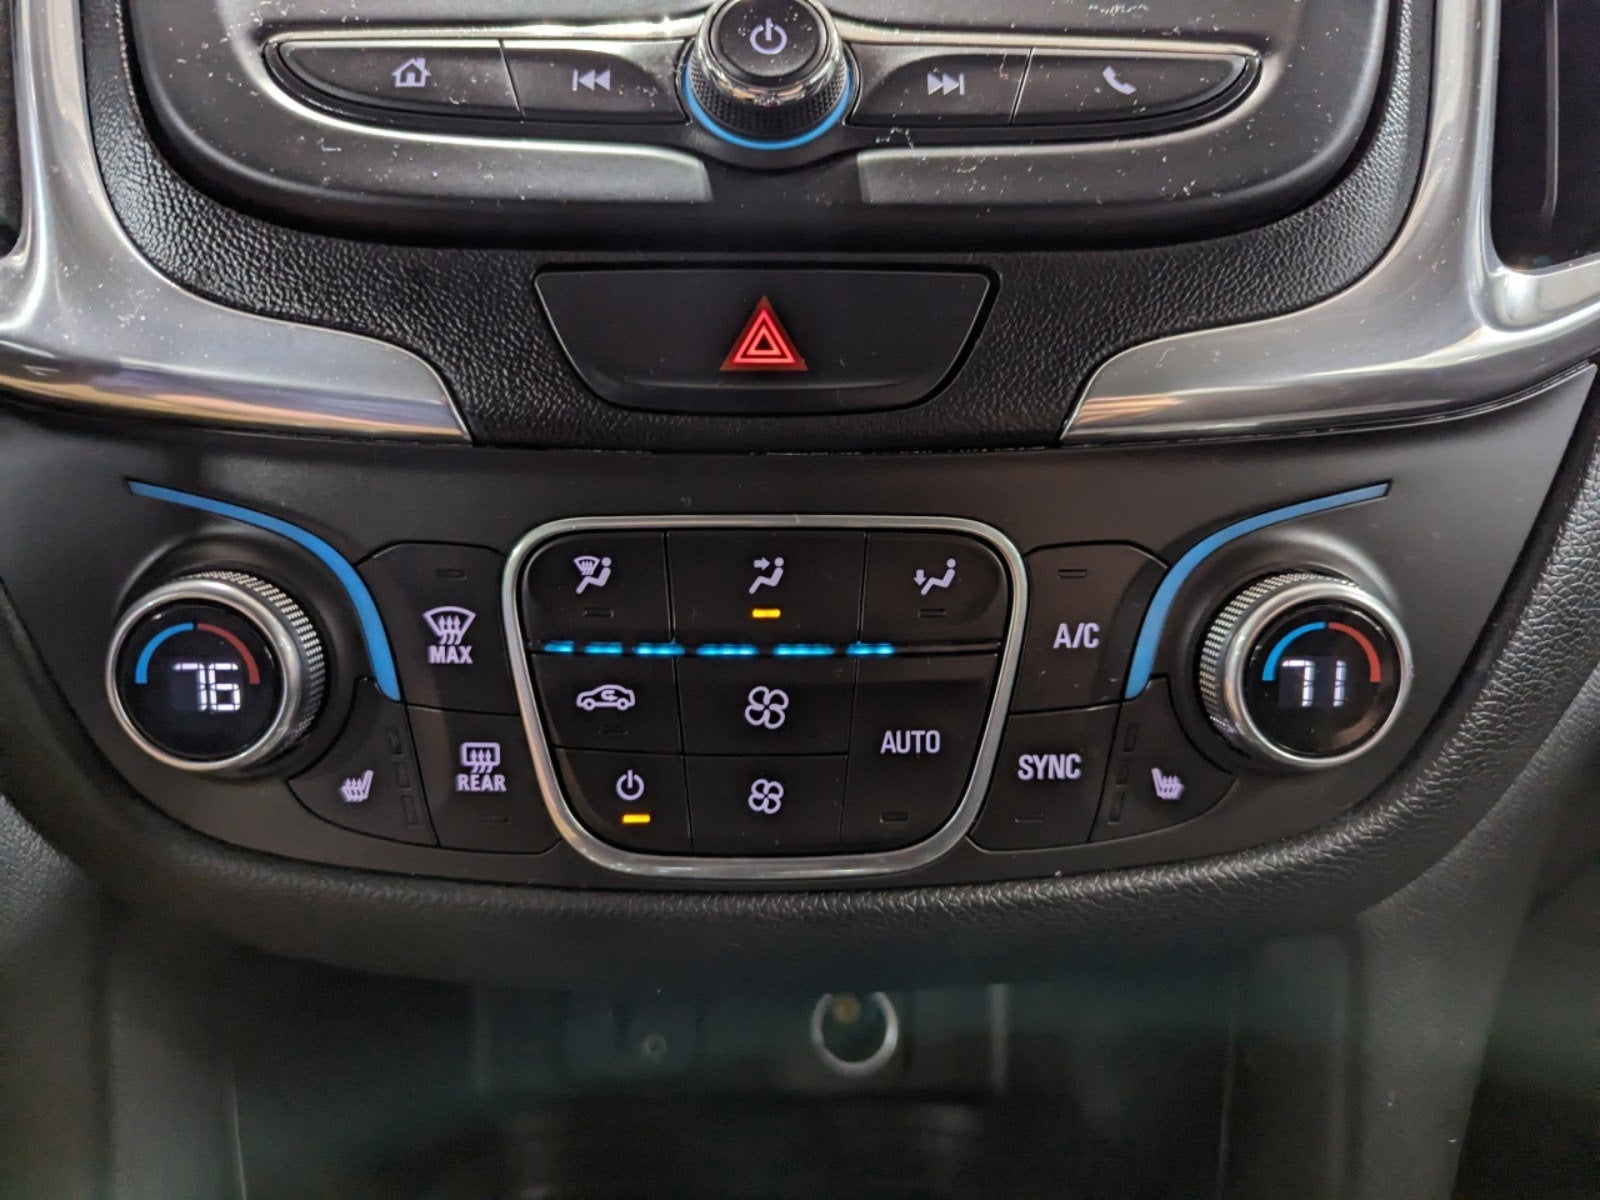 2018 Chevrolet Equinox LT Front Wheel Drive Remote Start System Premium Cloth Preferred Equipment Pkg